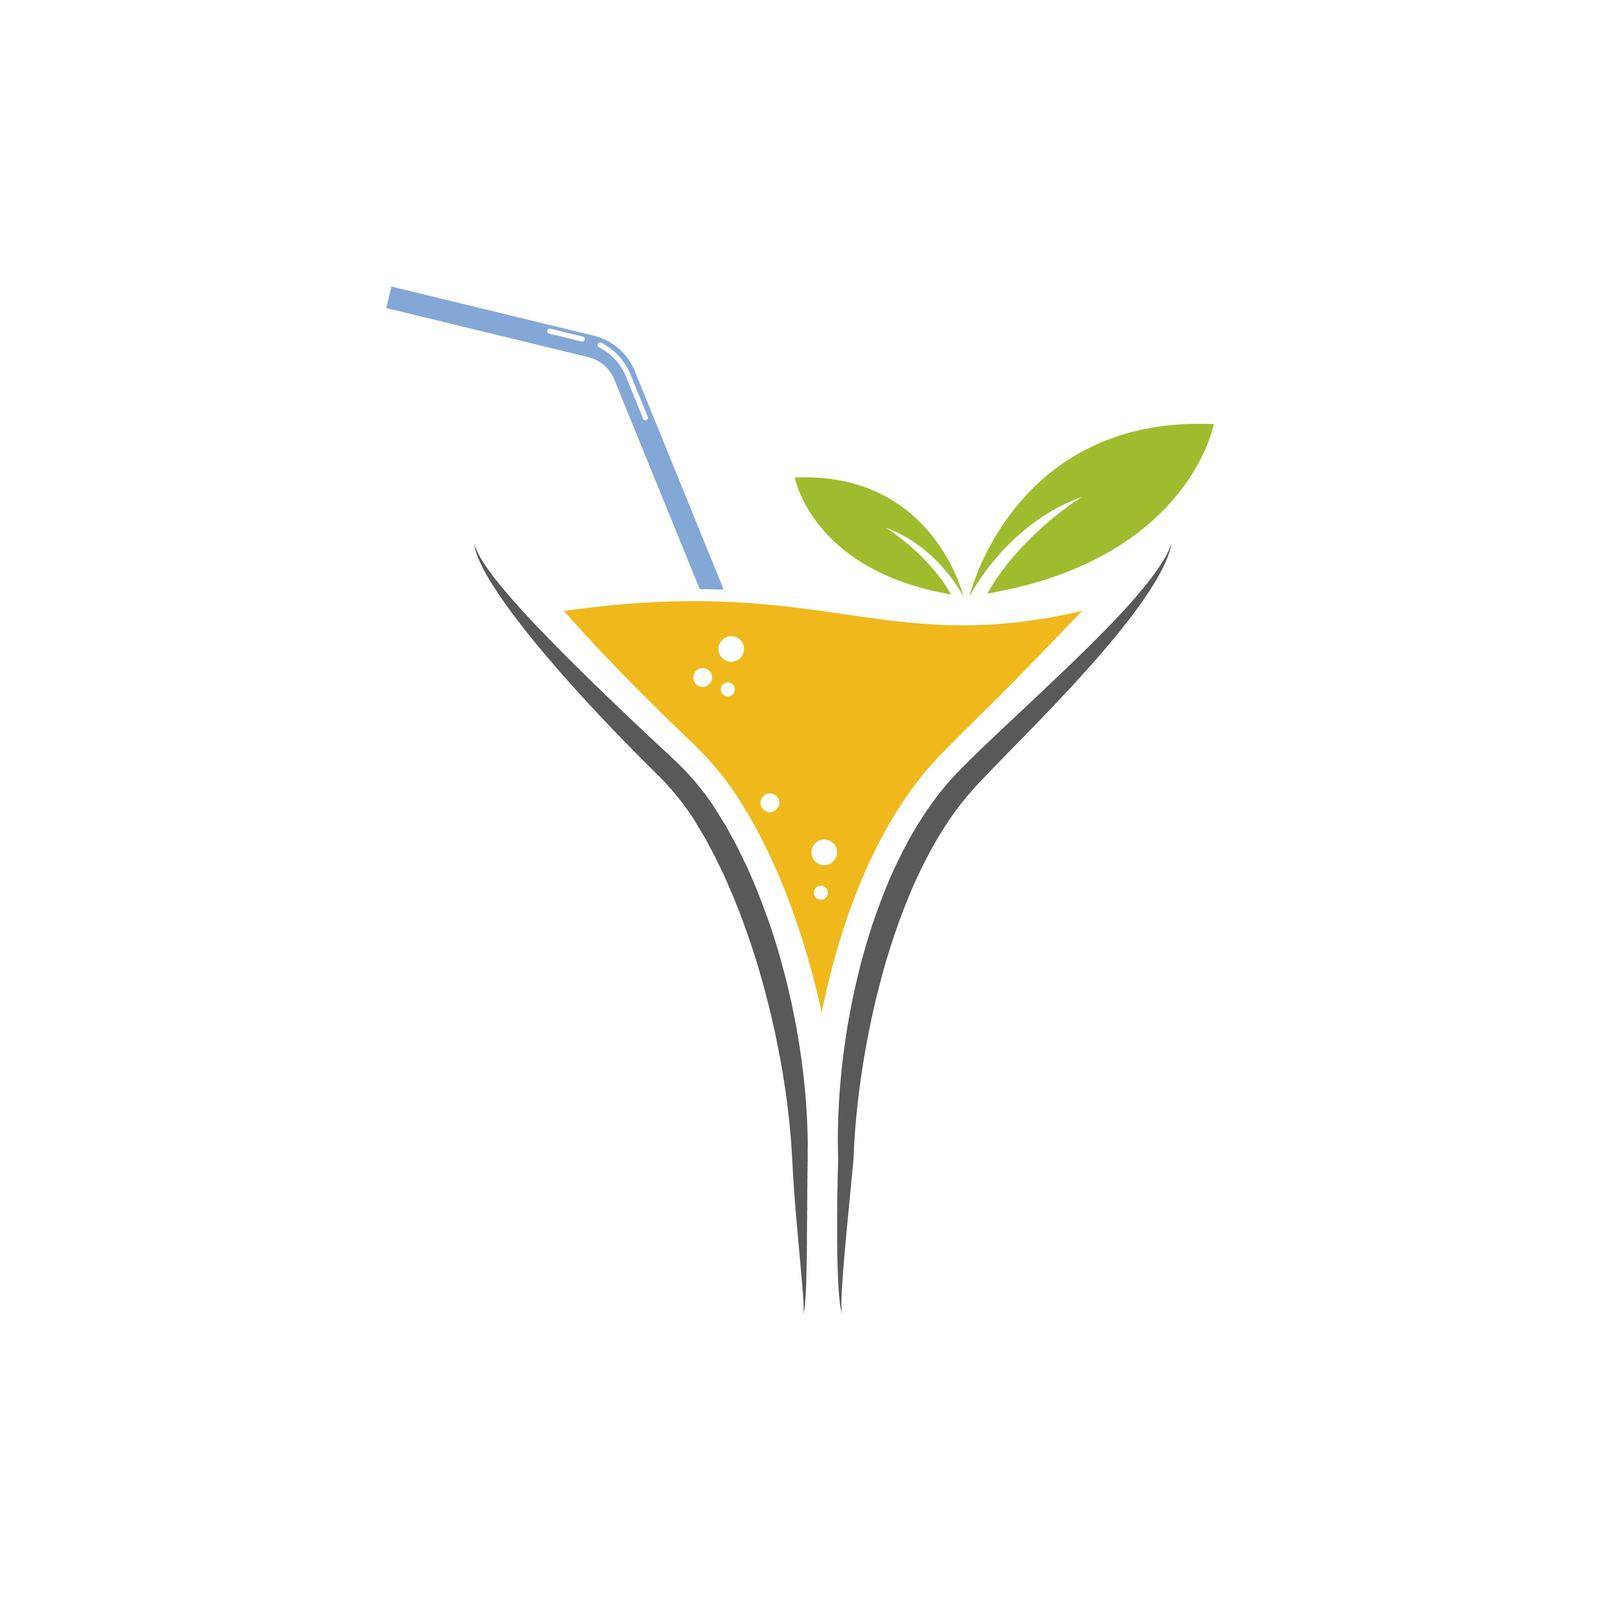 Juice logo fresh drink brand by awk